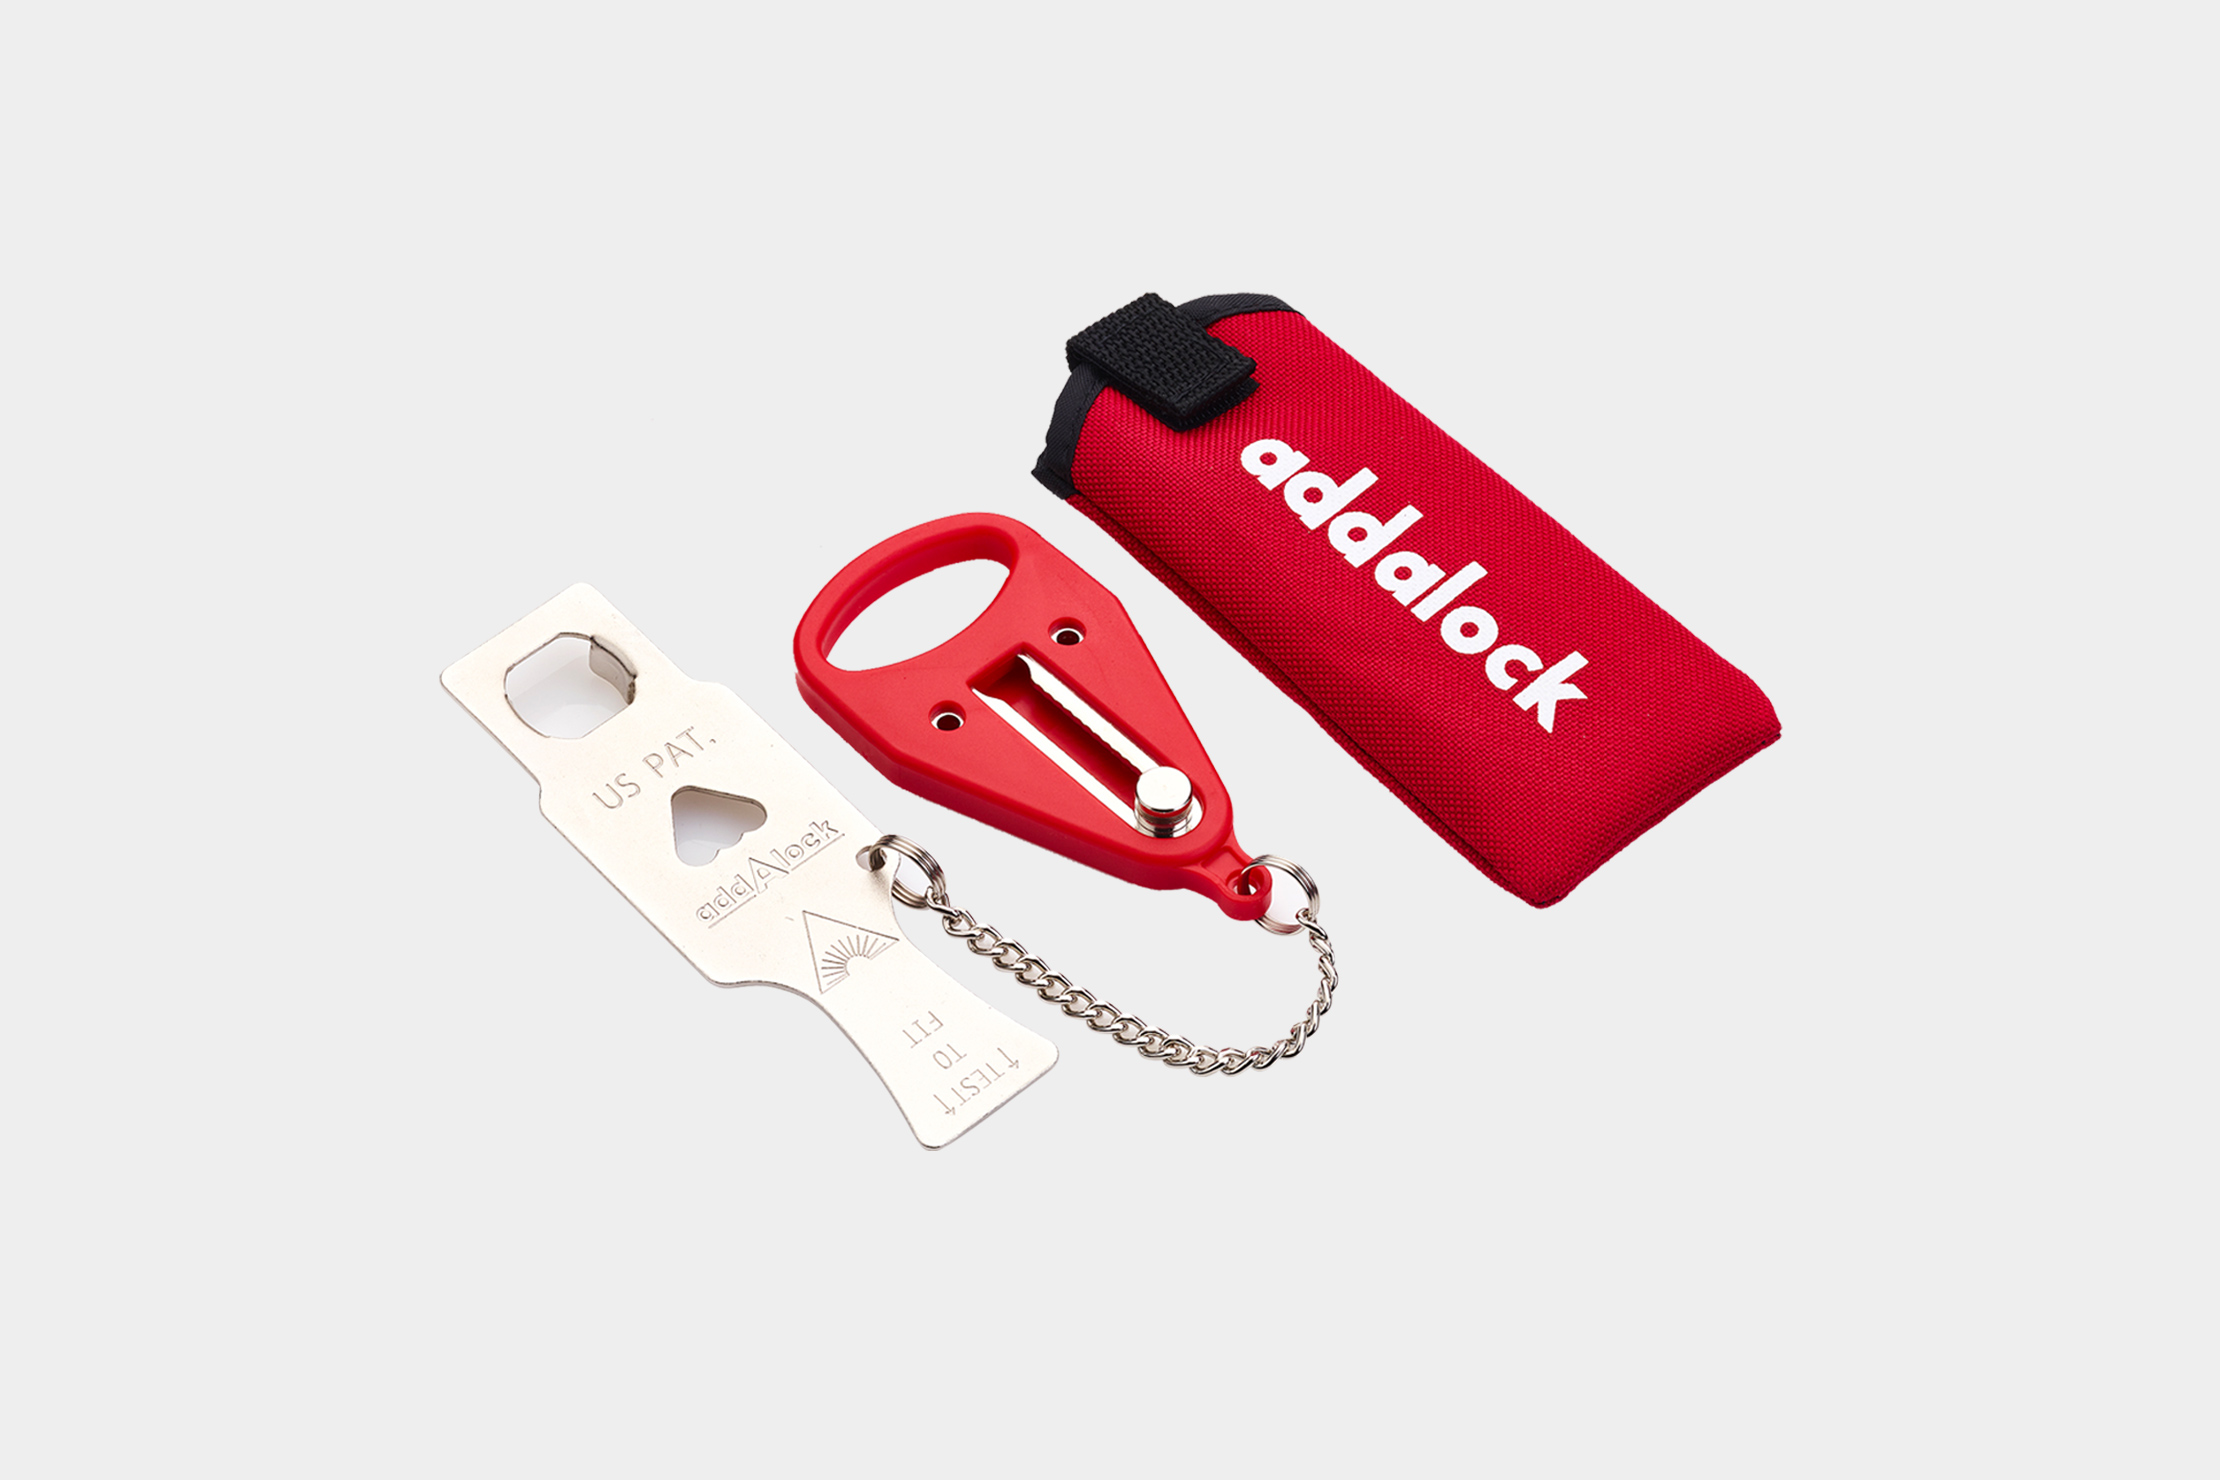 Addalock The Original Portable Door Lock for Travel & Home Security,  Durable 1-Piece Door Latch